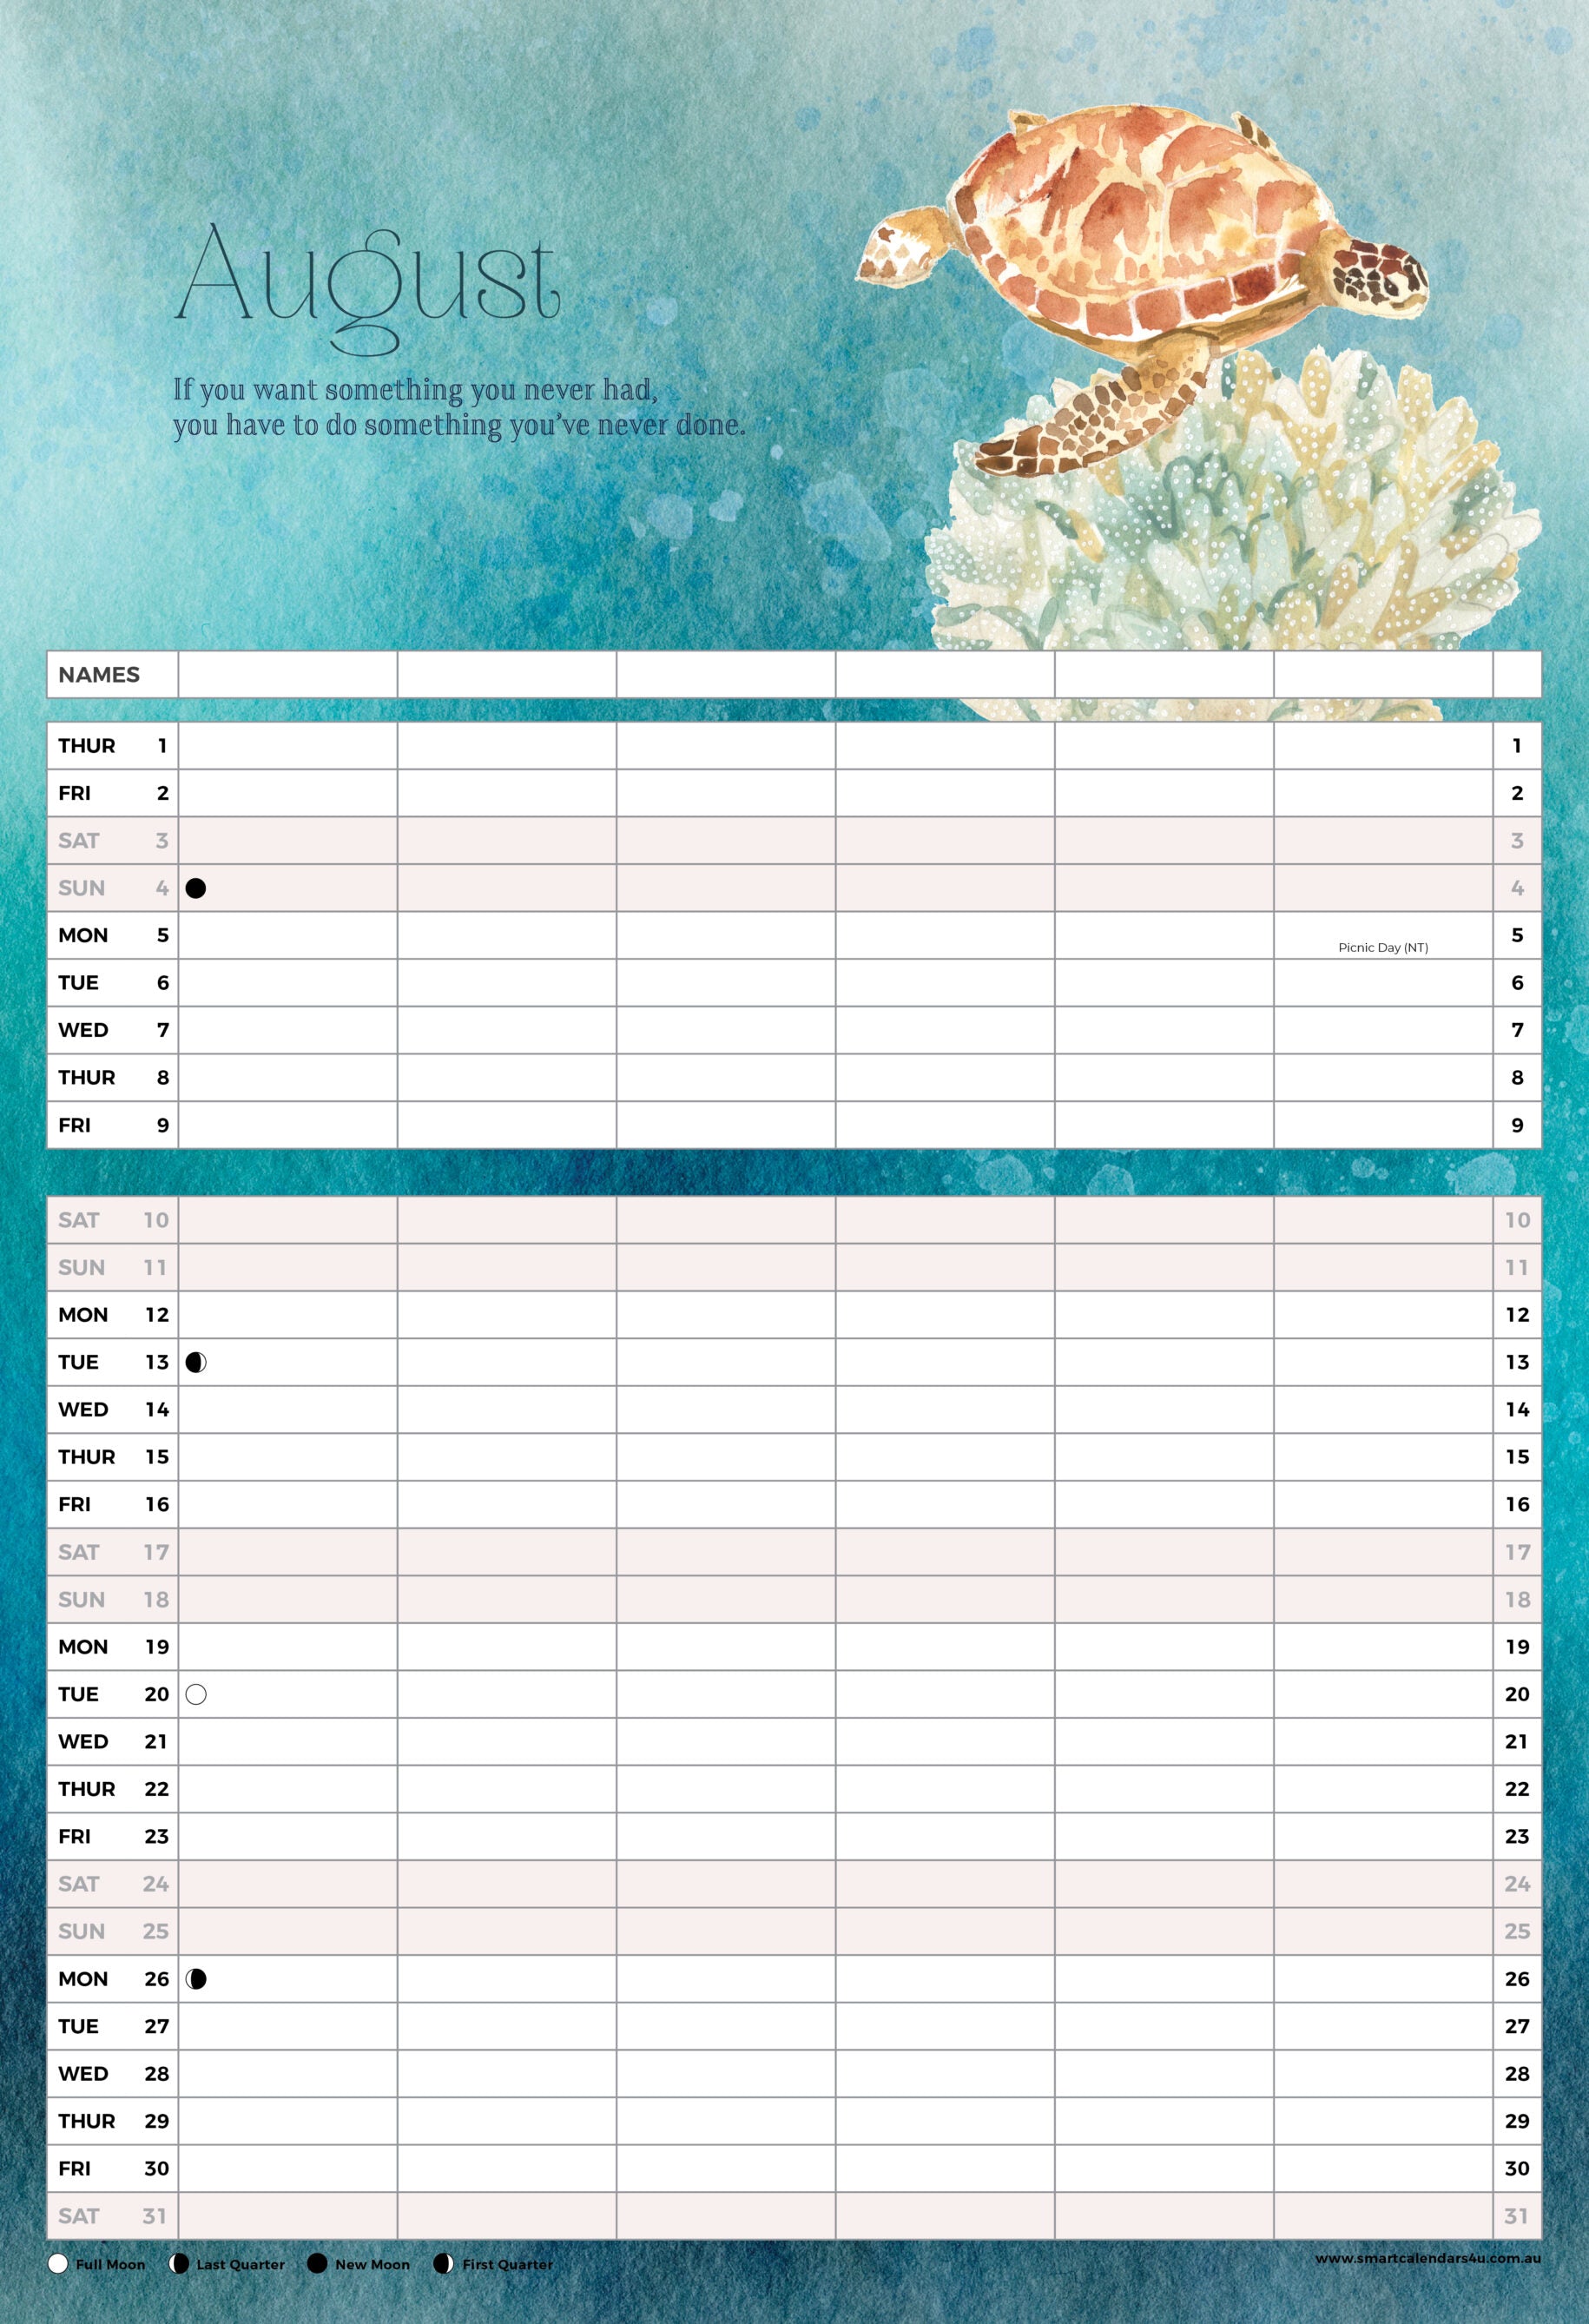 2024 Oceanic (Australian Family Organiser) - Horizontal Wall Calendar